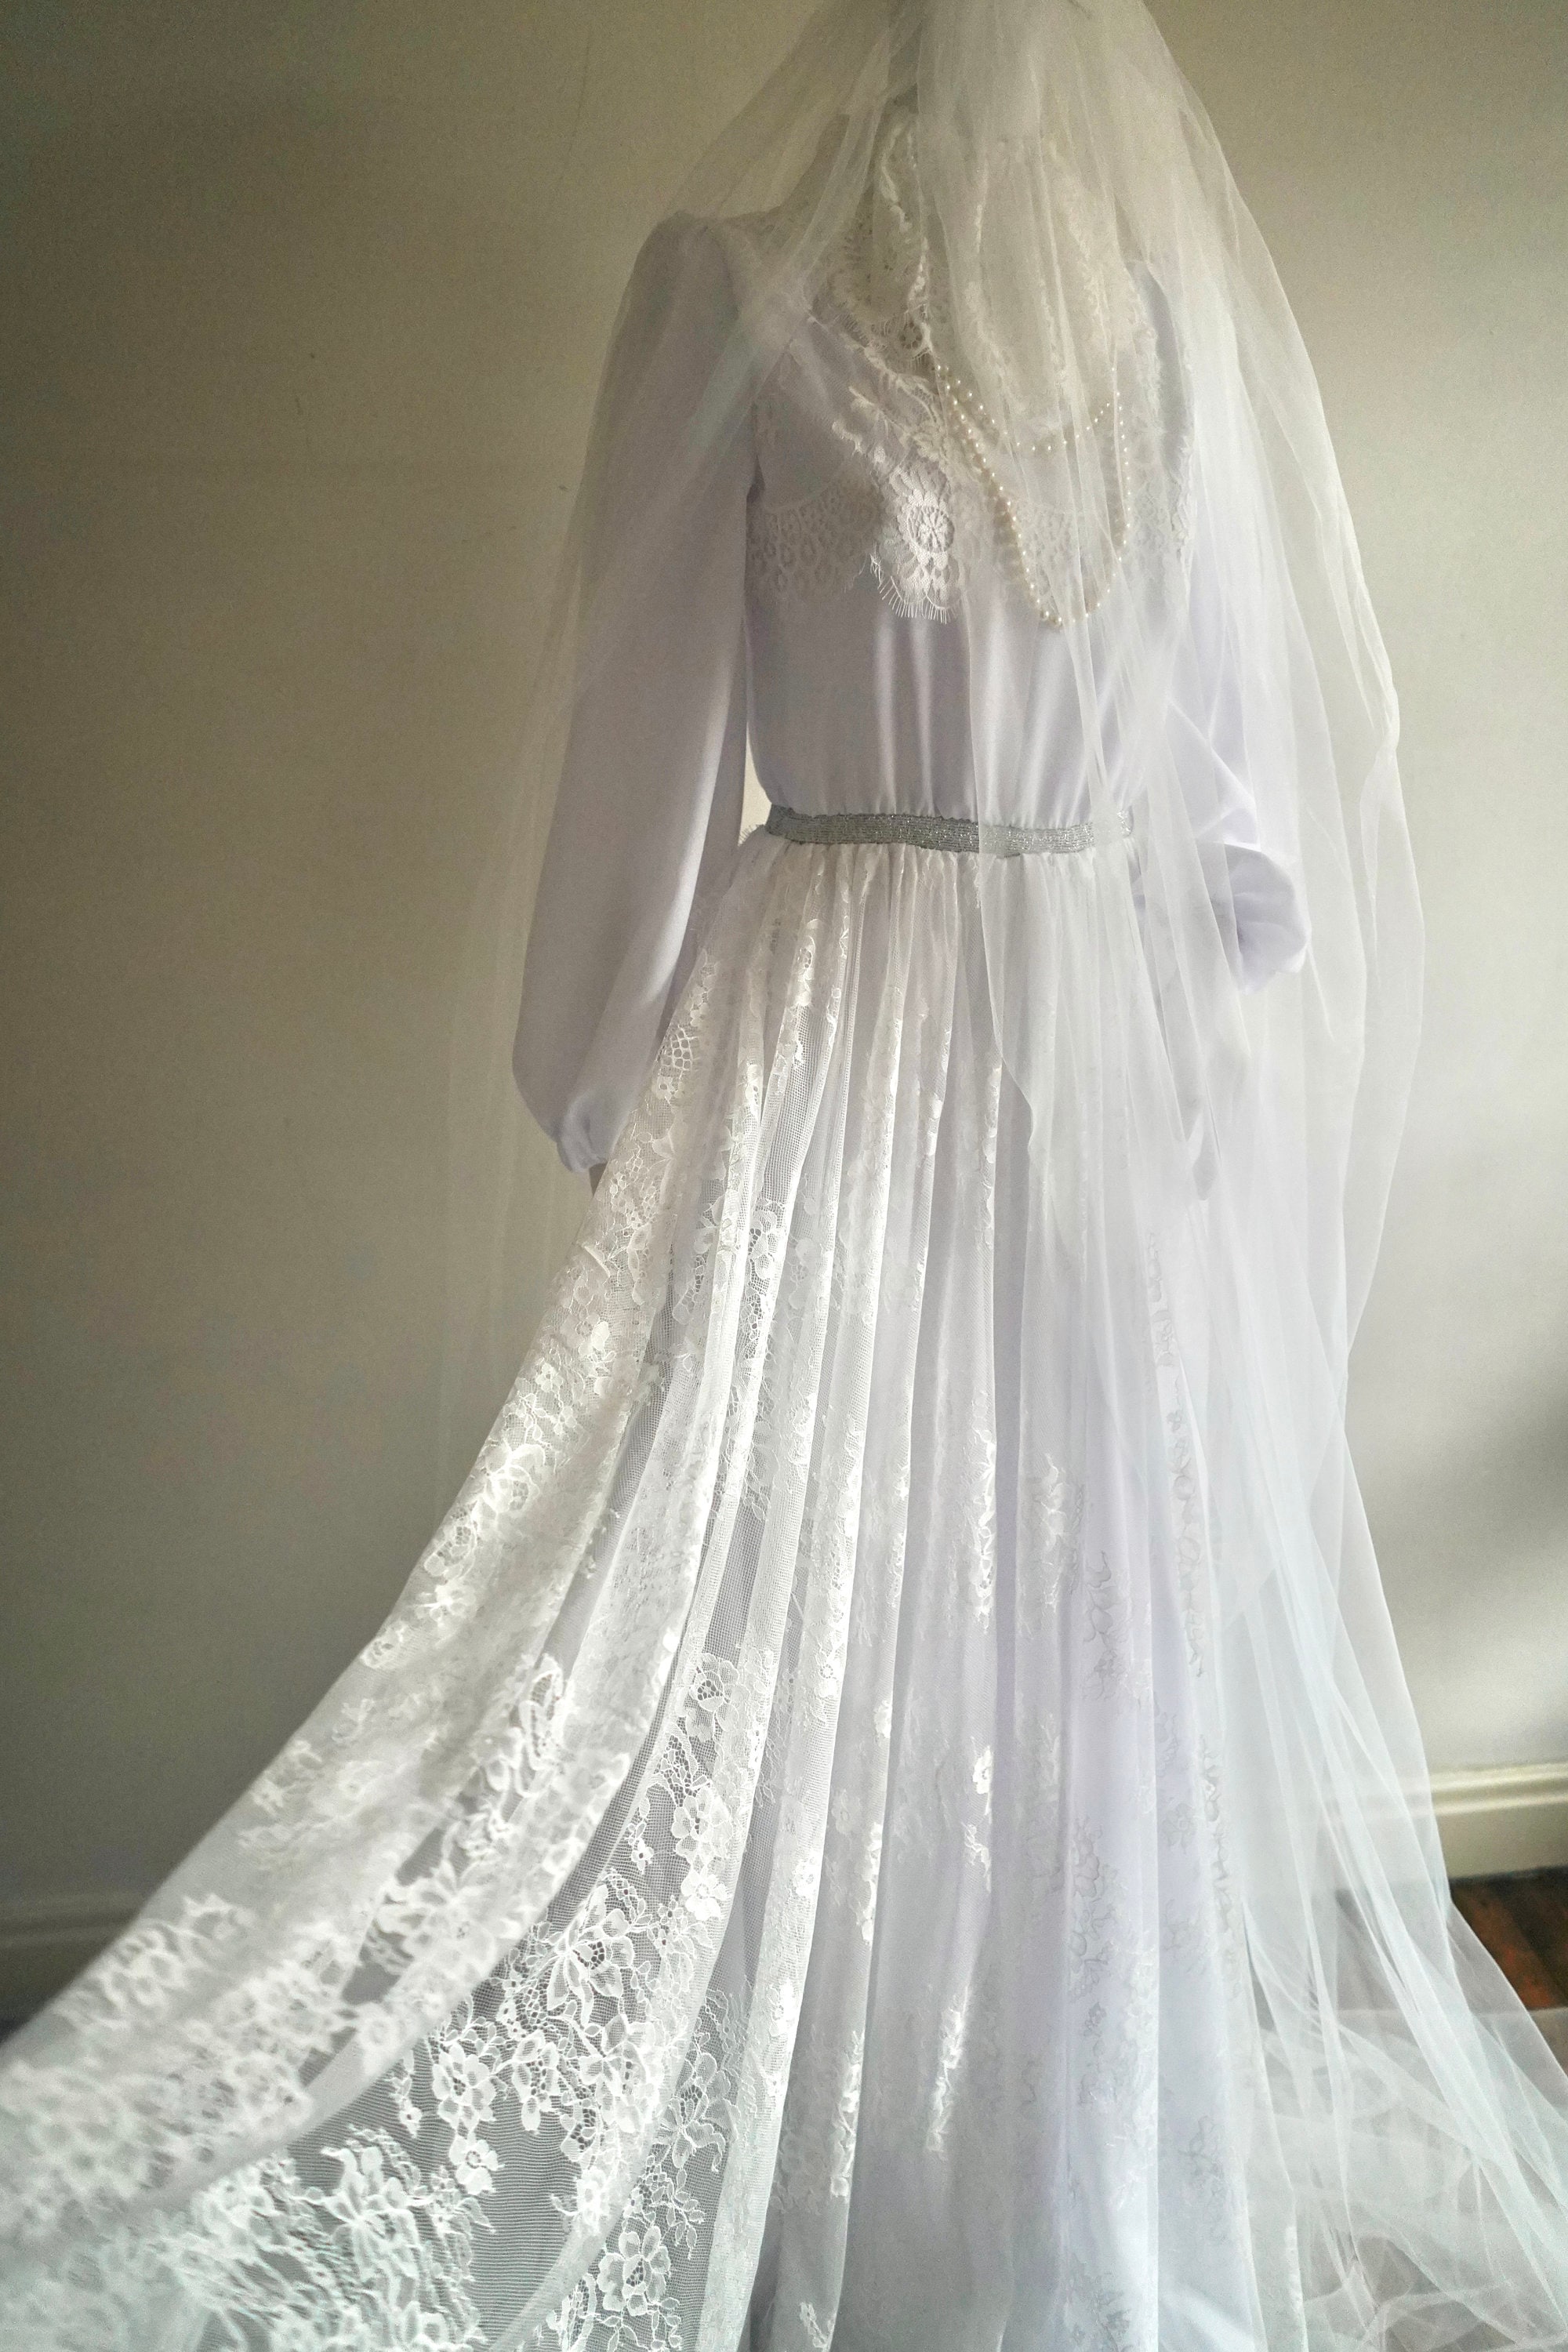 Ddapj pyju Ghost Corpse Bride Costume for Women,2023 Halloween Vintage Gothic Corset Floor Length Dress Lace Mesh Splice Ball Dresses with Veil